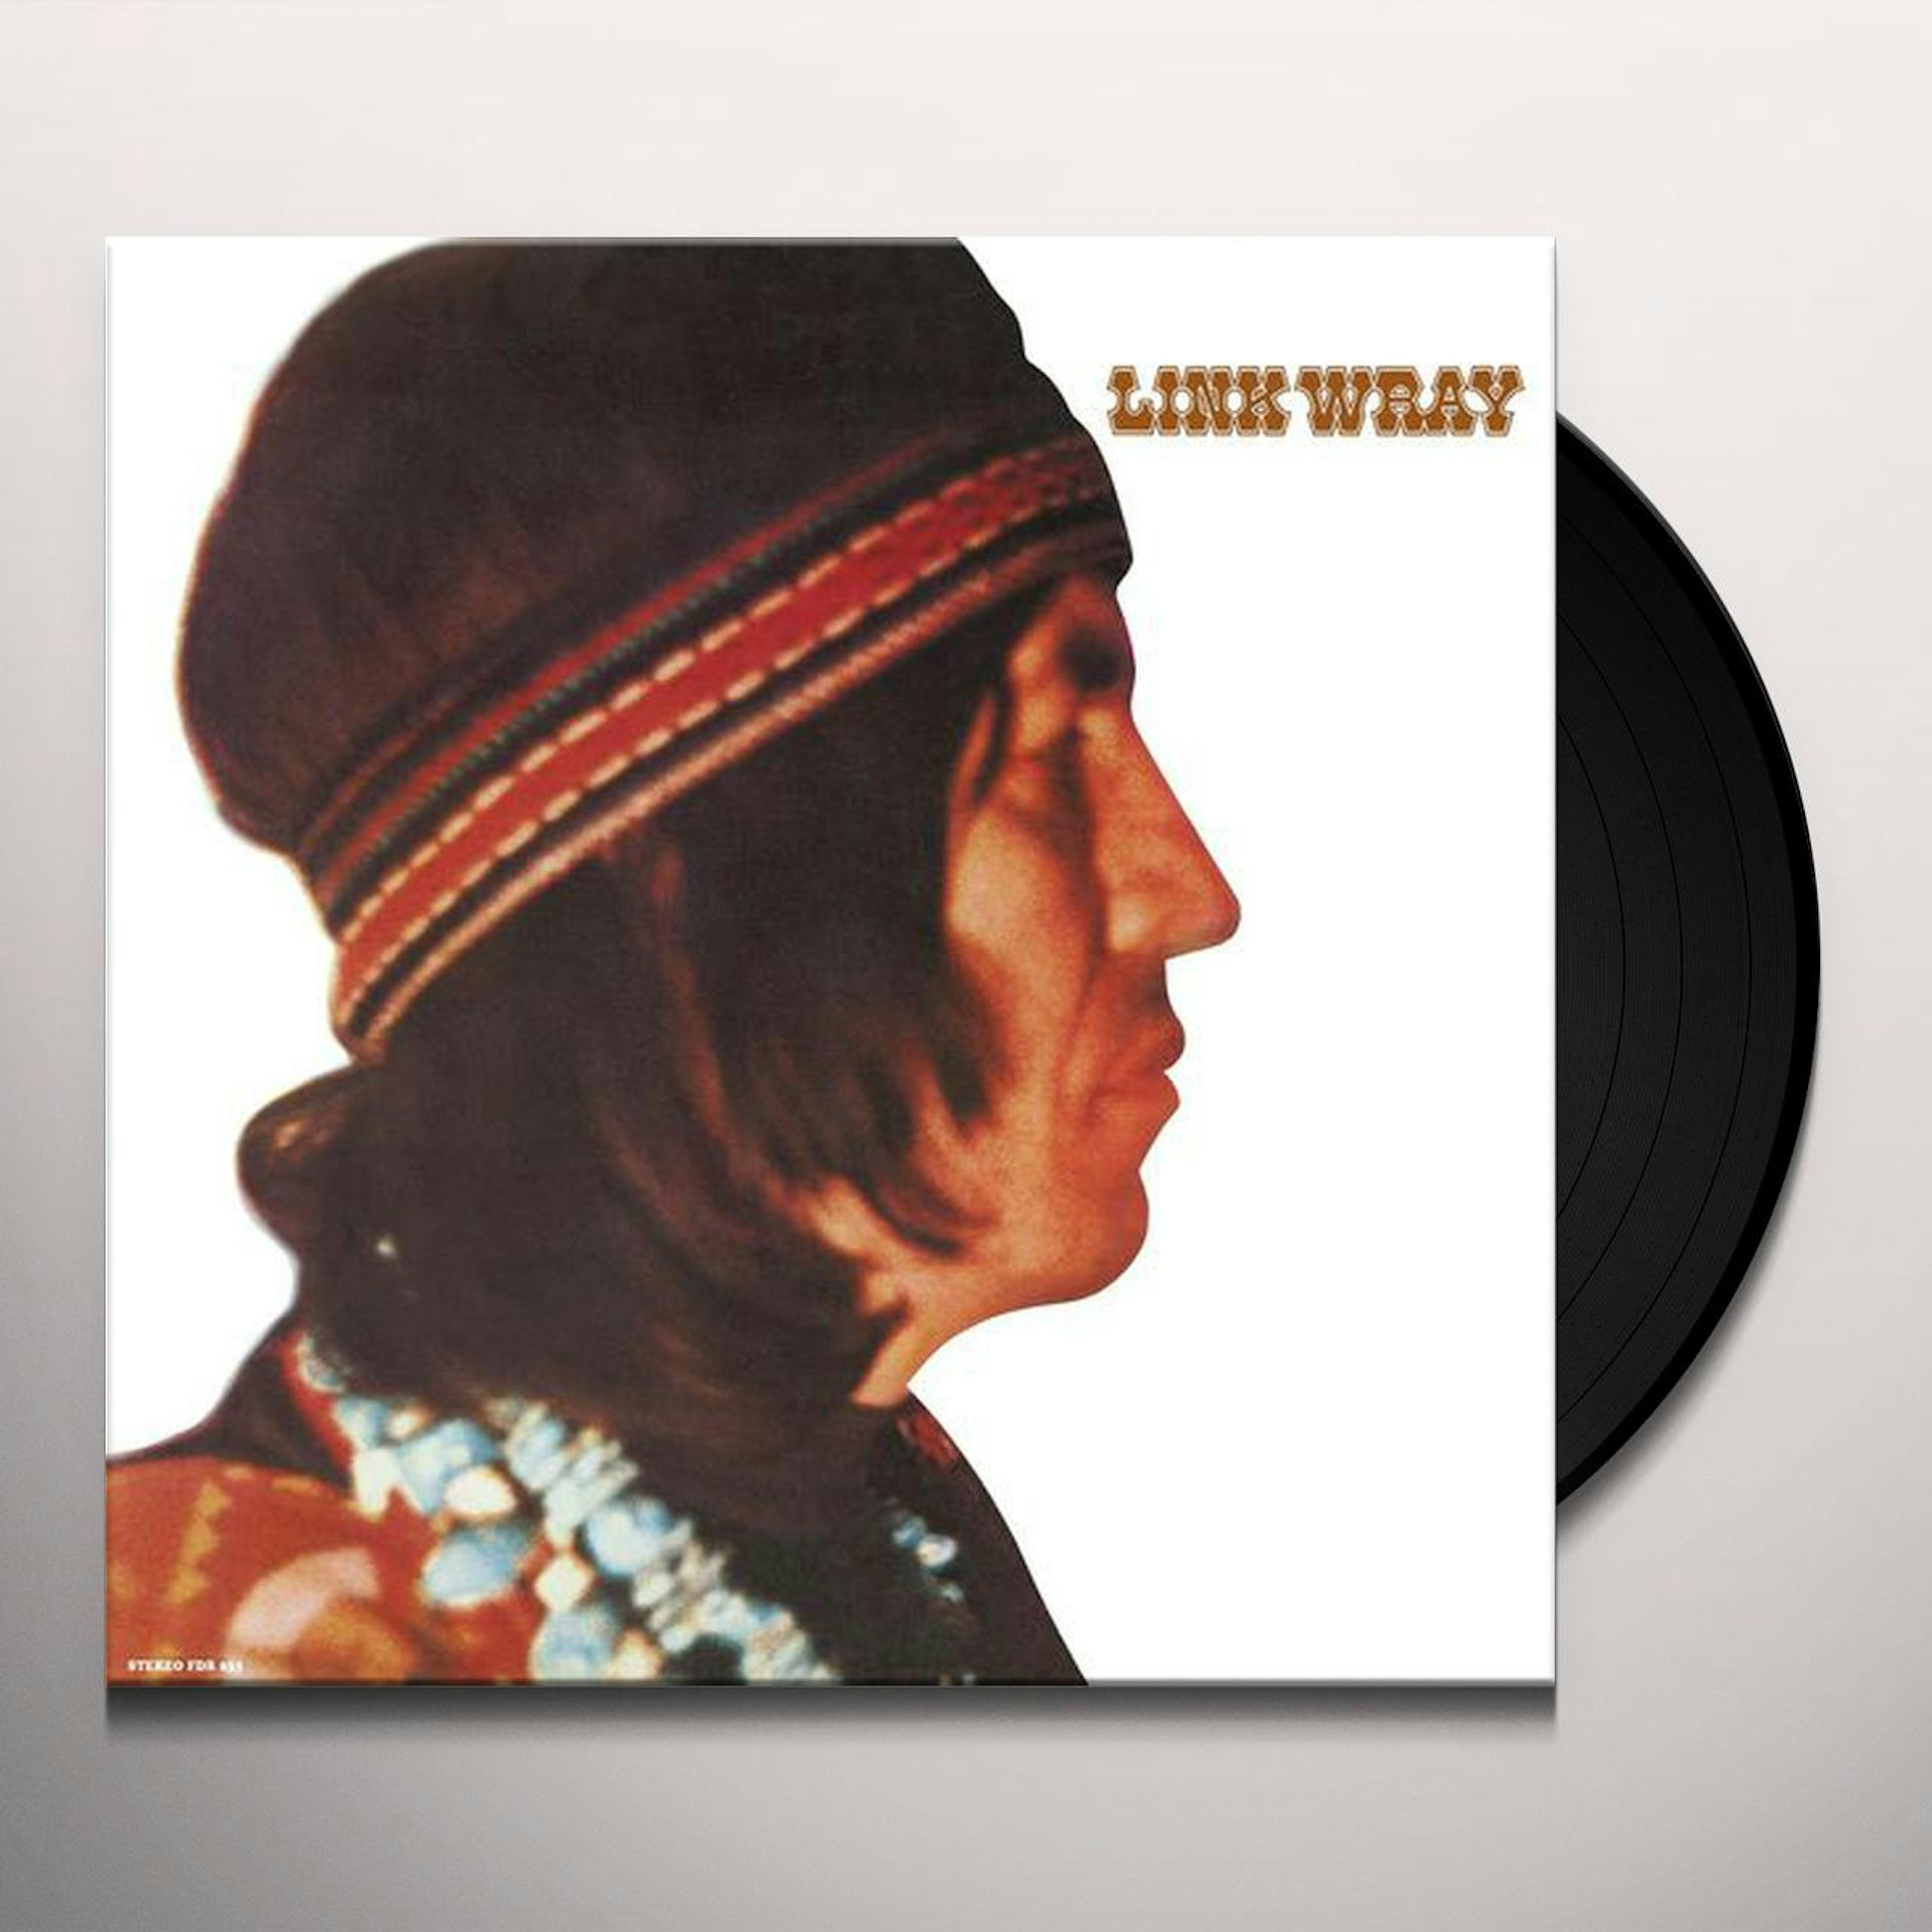 Wray Vinyl Record